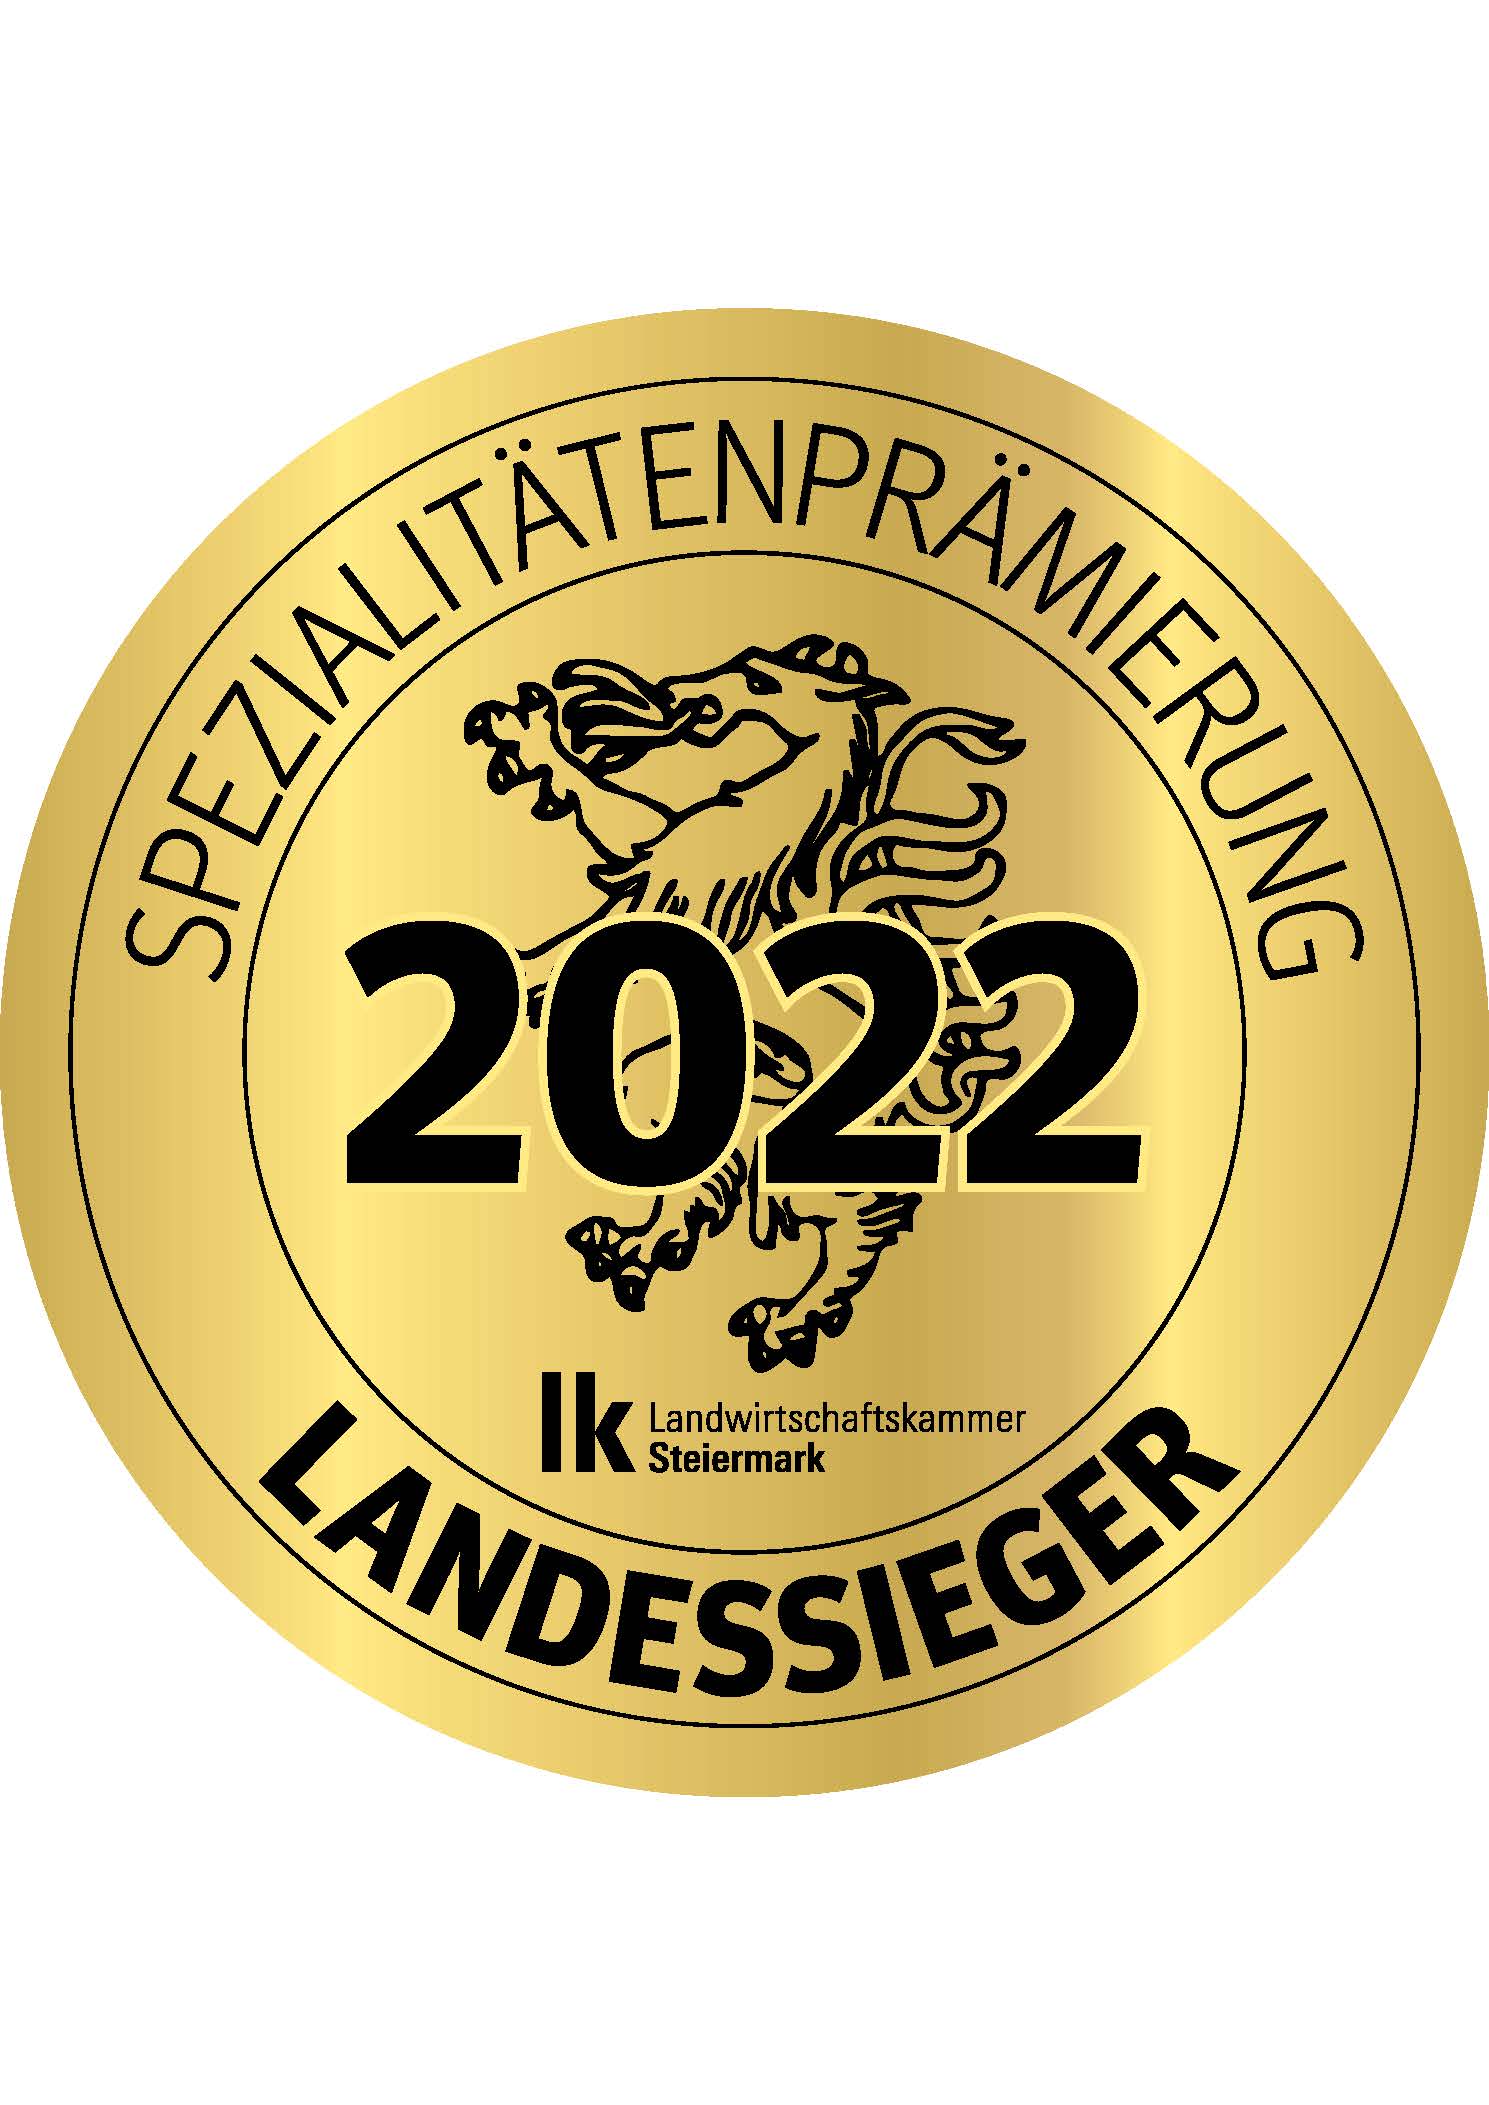 Landessieger 2022 Plakette